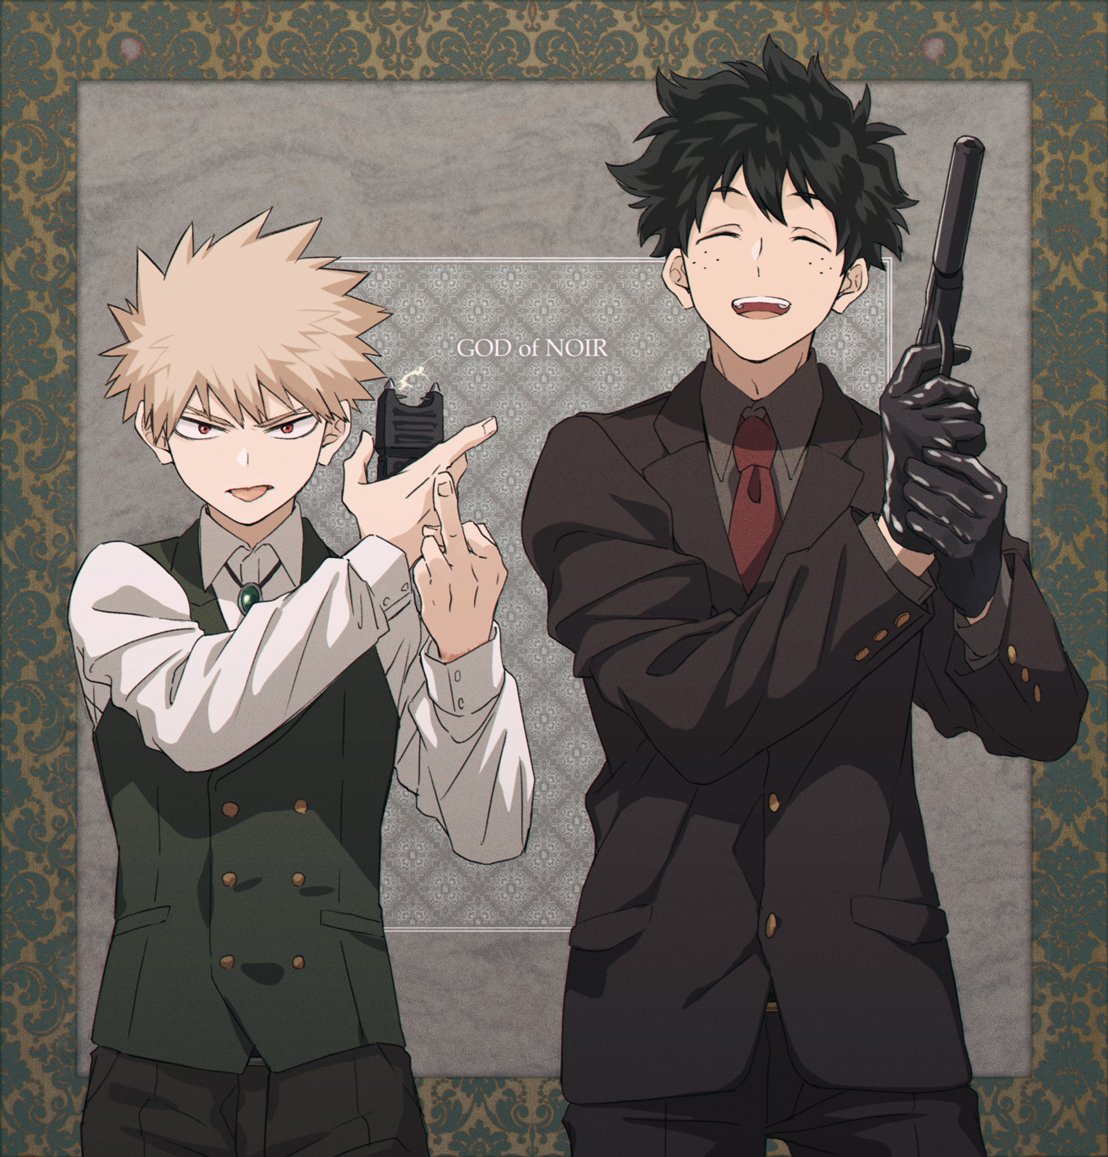 bakugou katsuki ,midoriya izuku multiple boys 2boys necktie freckles weapon gloves male focus  illustration images